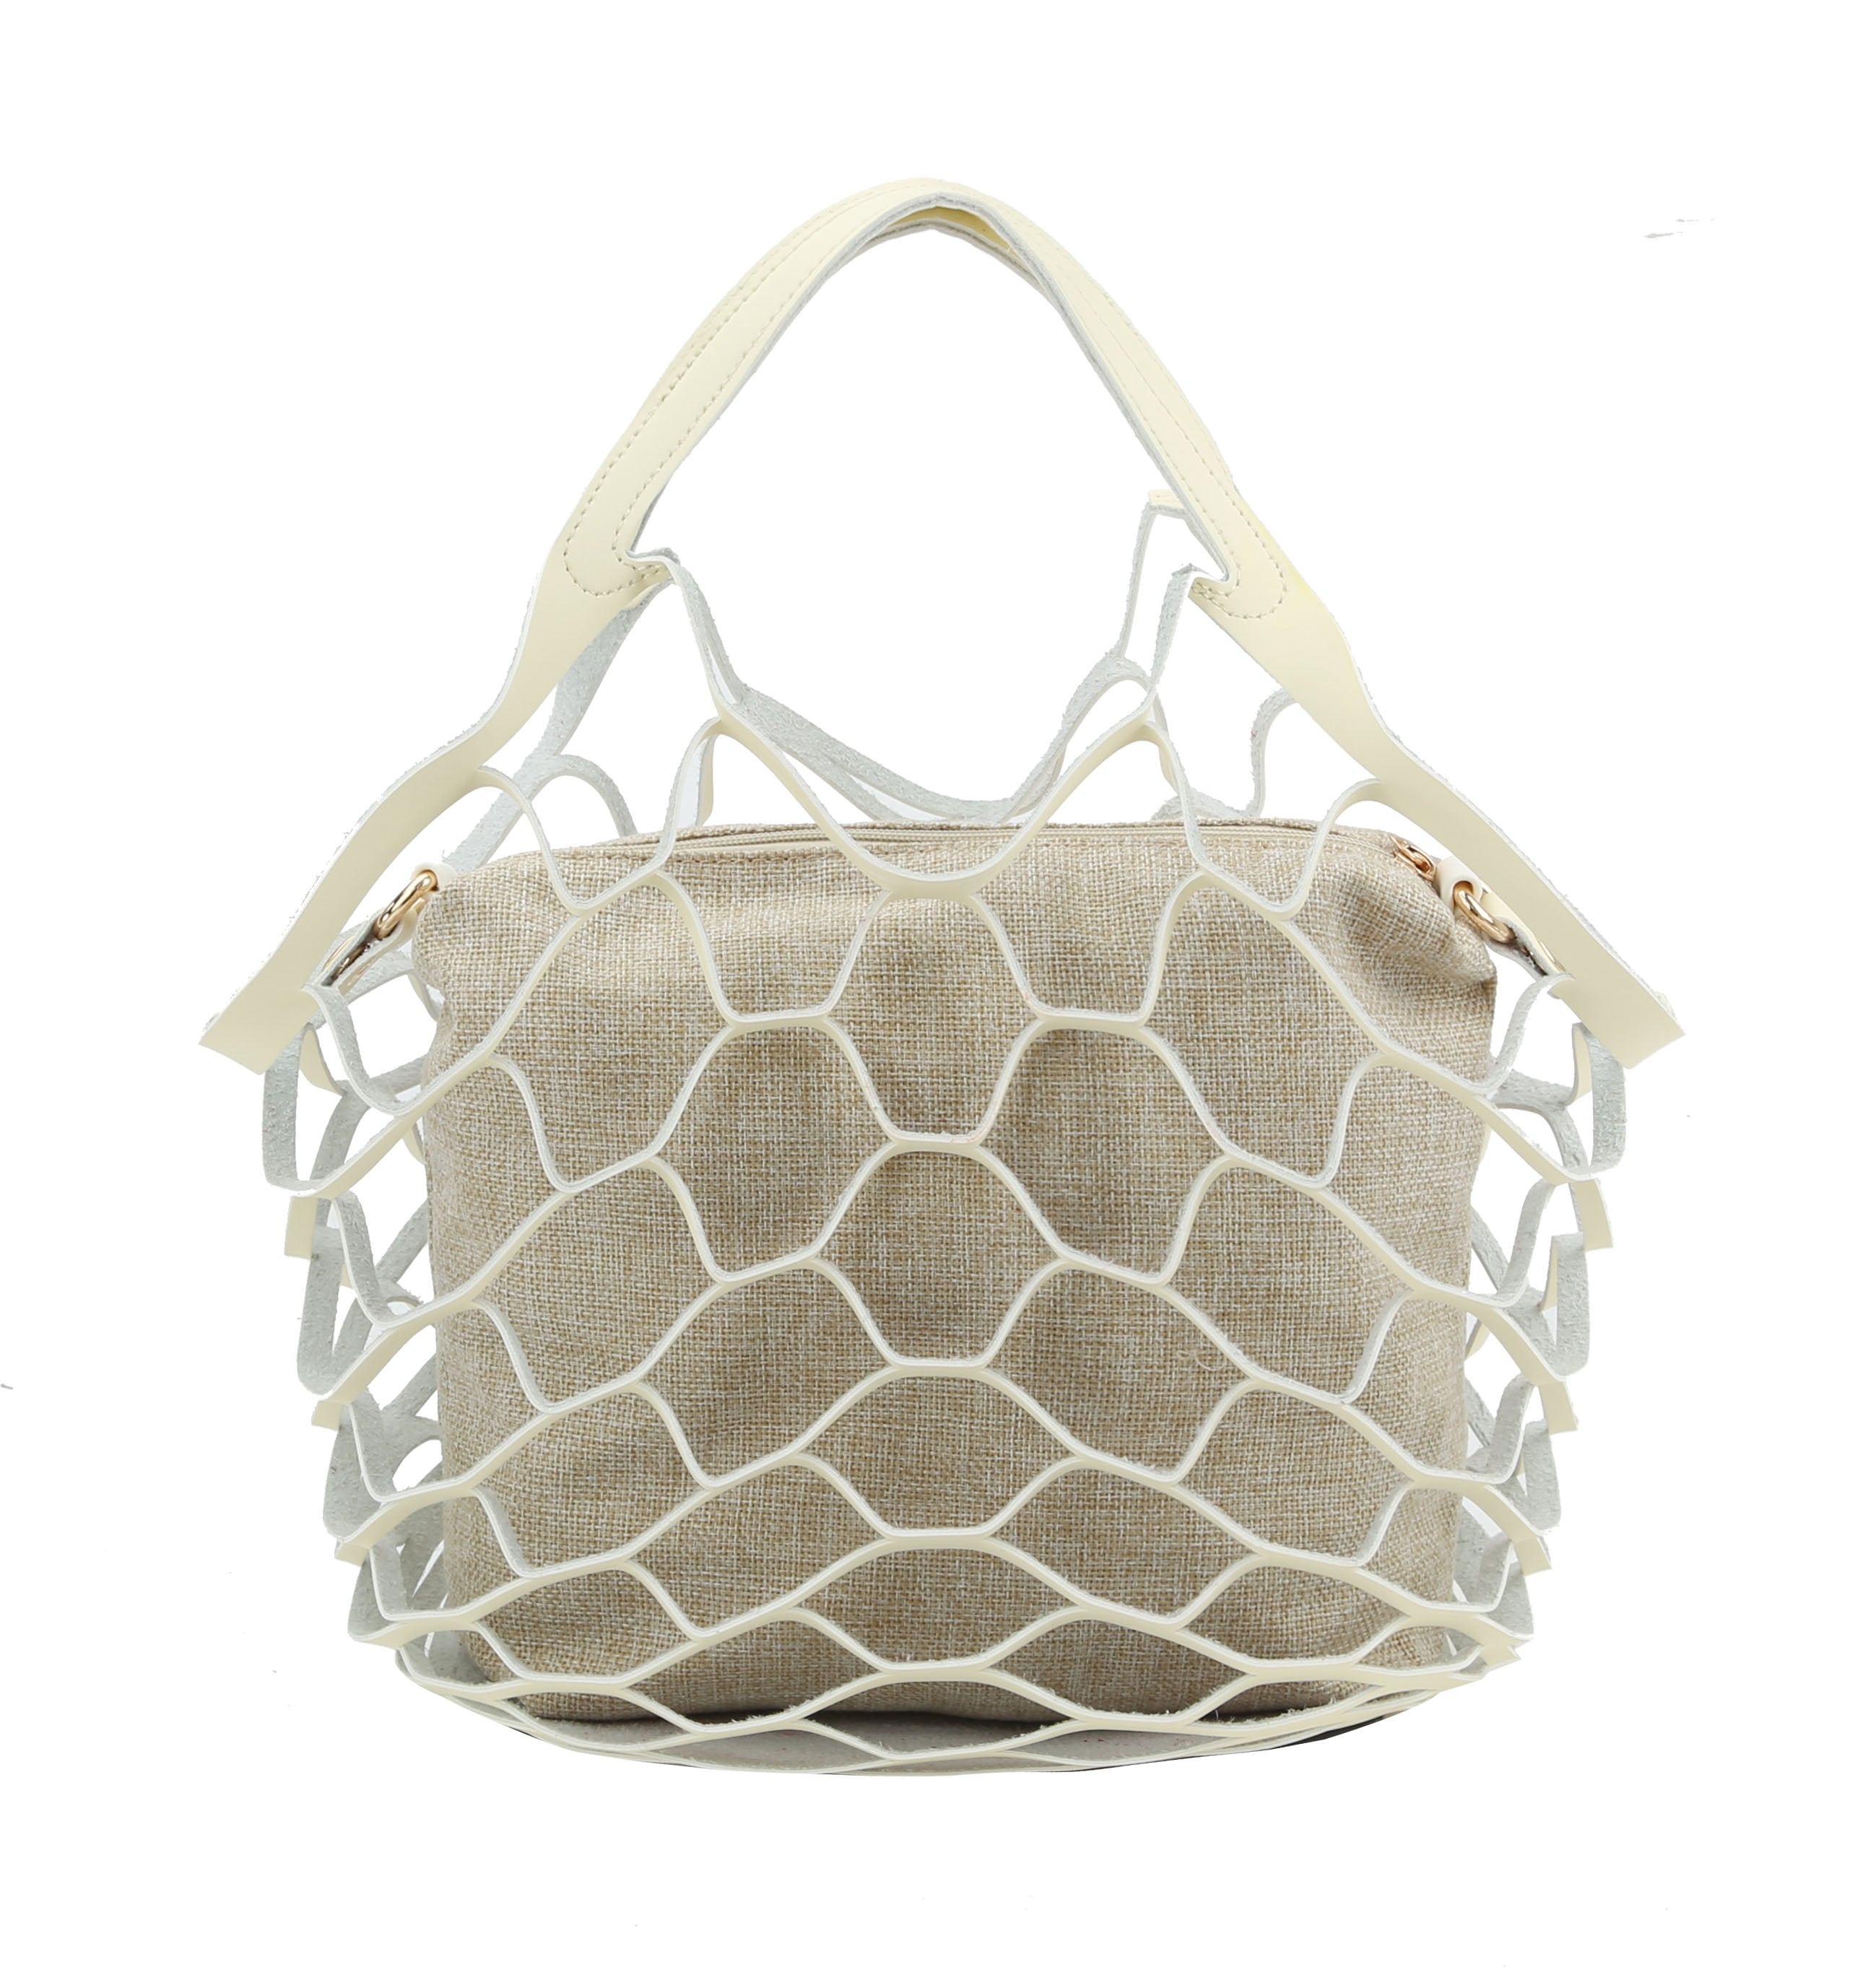 Mesh Beach CLUTCH Handbag Womens Casual Bag Foldable For Beach Picnic Vacation and Shopping